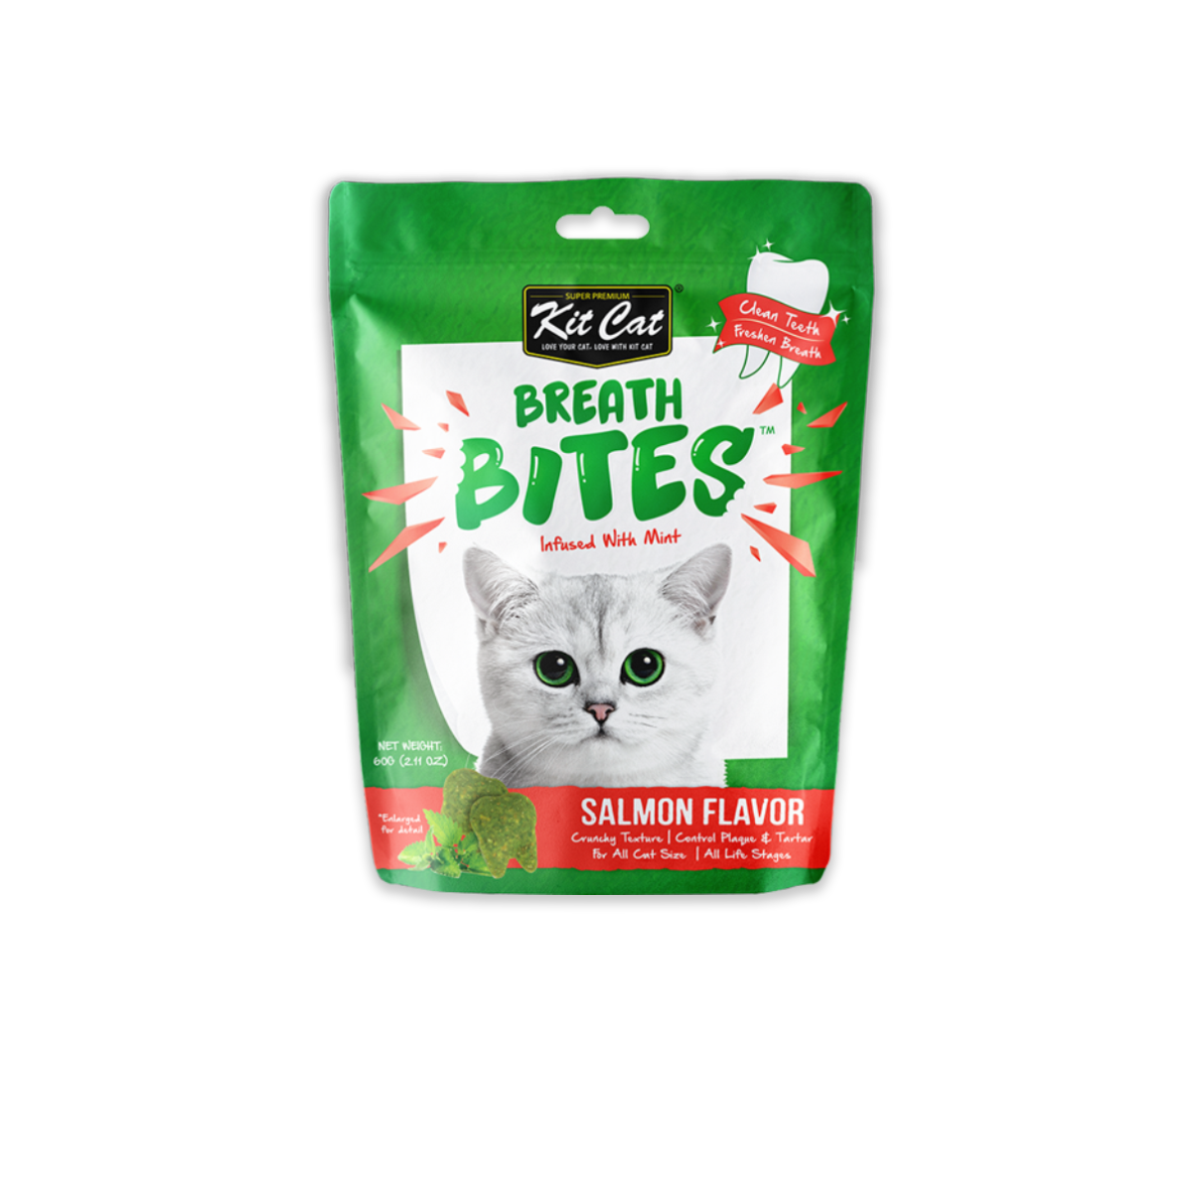 Kit Cat Breath Bites Infused with Mint Salmon Flavor คิทแคท เบรทไบรท์ ขนมขัดฟันแมว รสแซลมอน ขนาด 60 กรัม